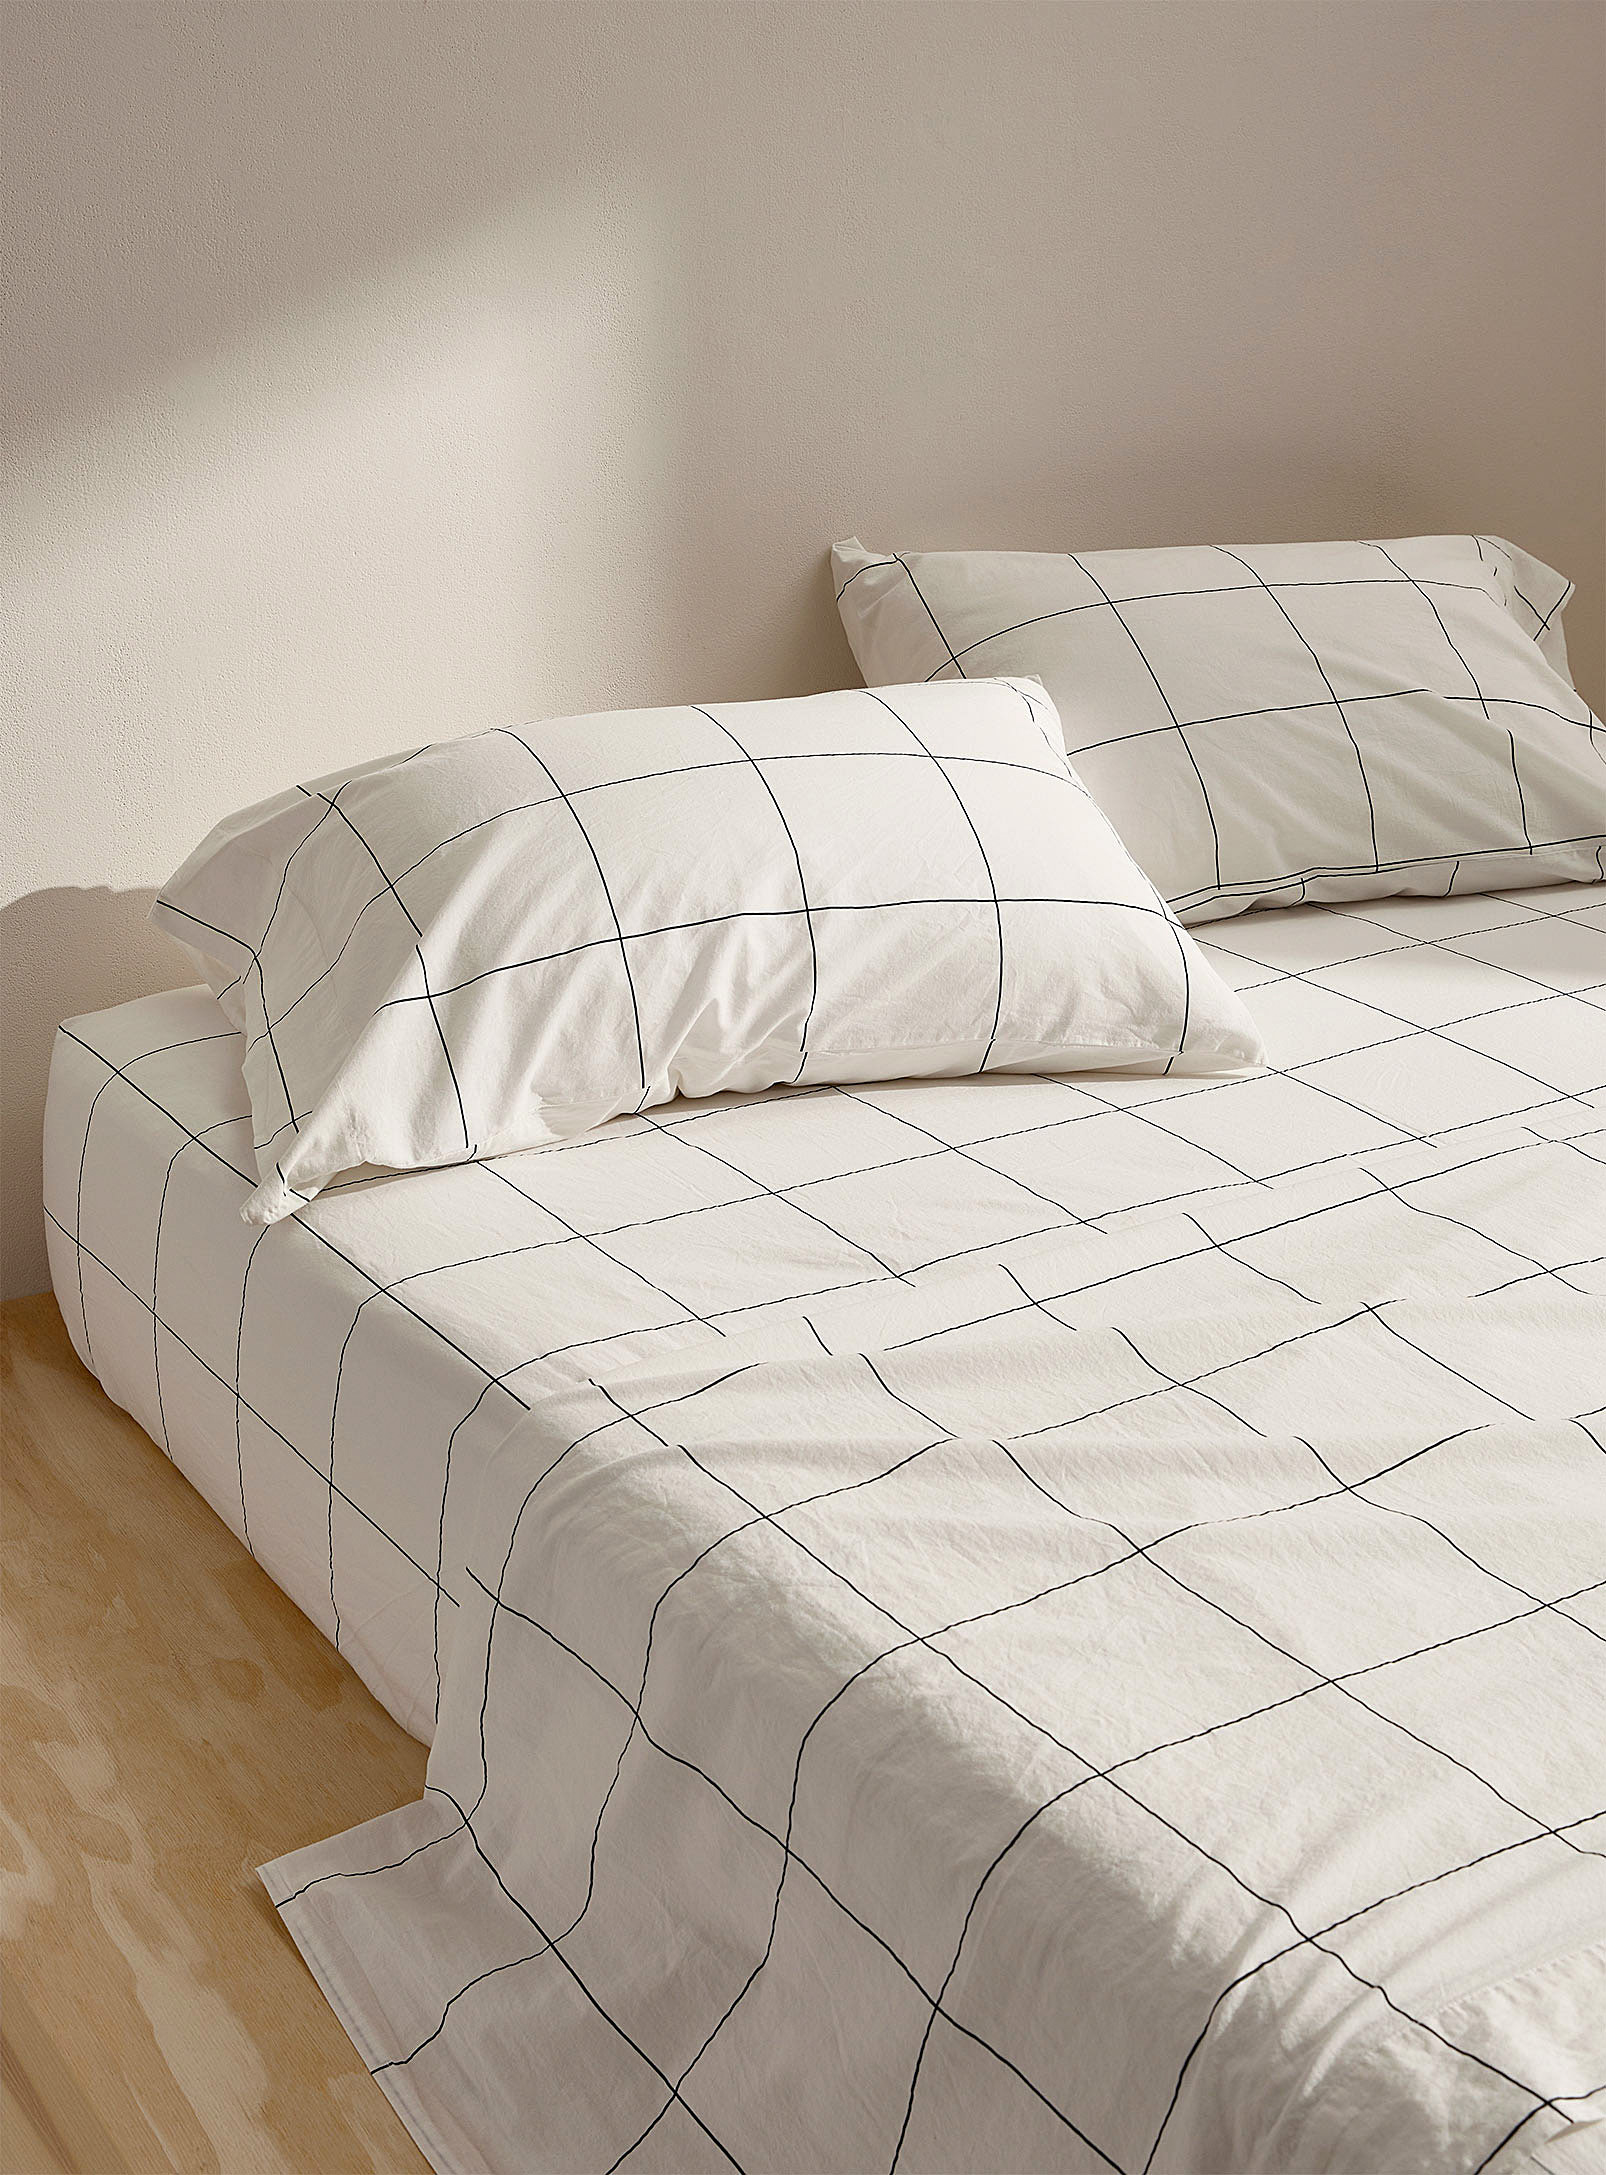 Simons Maison - Windowpane checks bedsheet set Fits mattresses up to 16